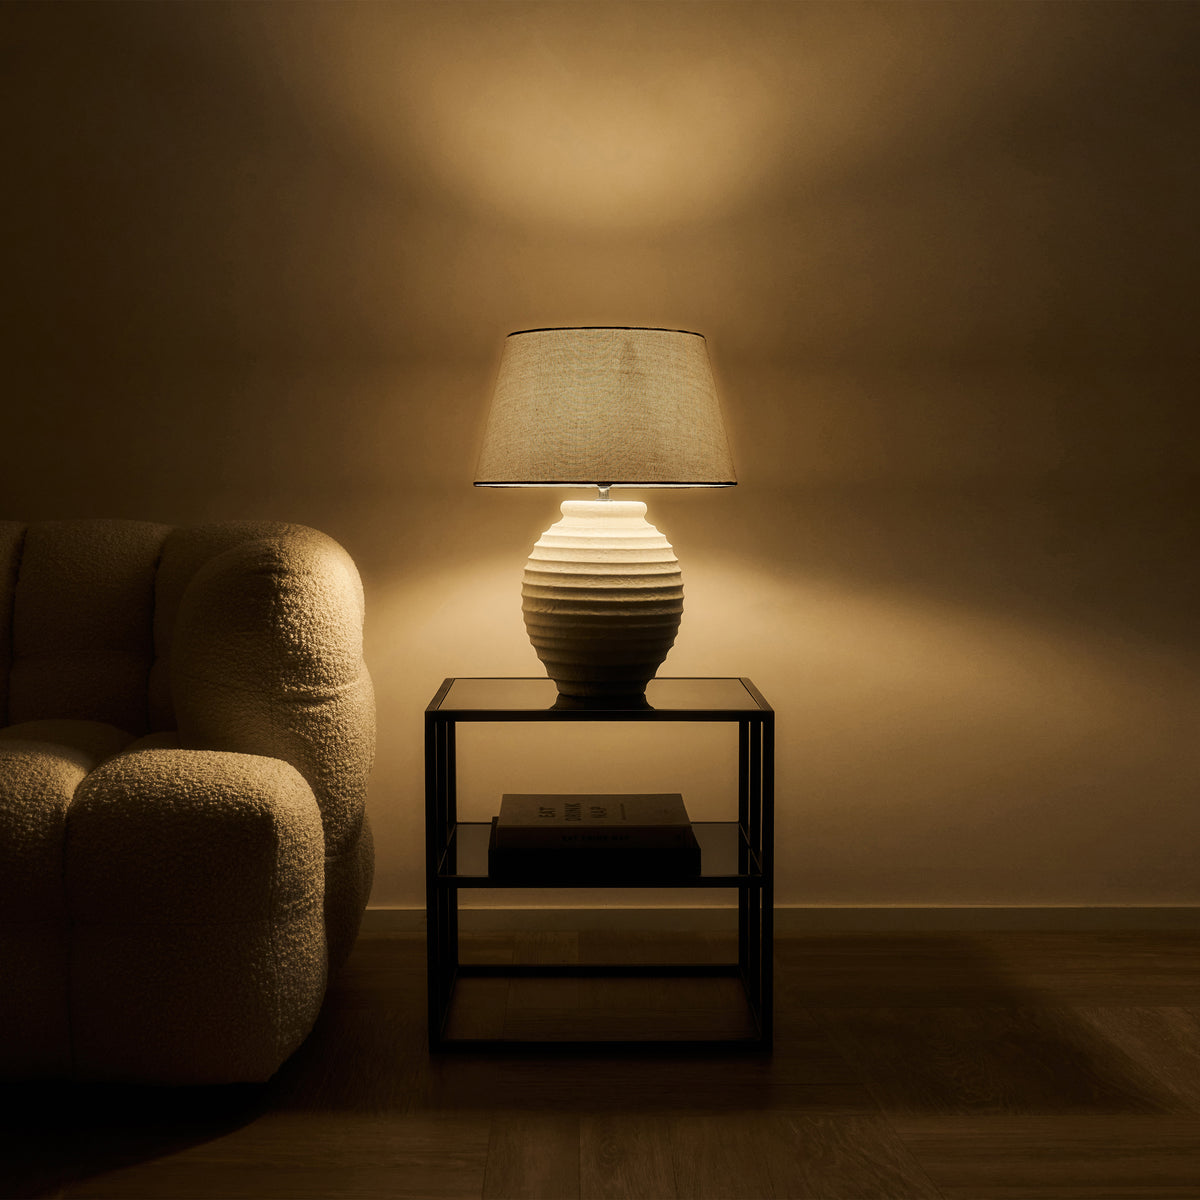 Textured Ceramic Based Table Lamp Beige Shade emitting warm lighting